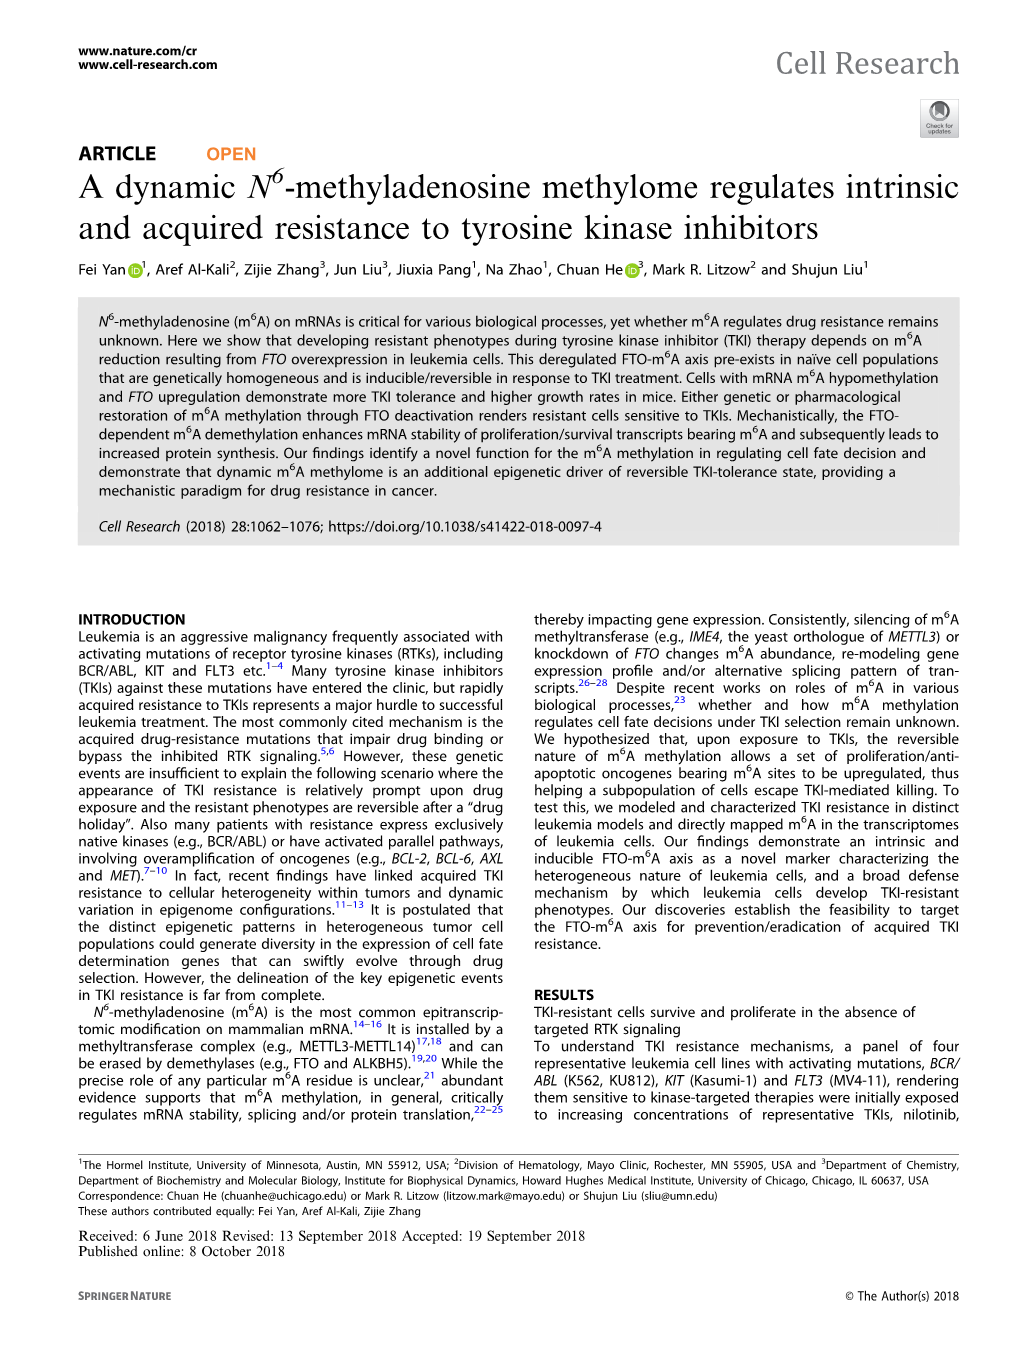 A Dynamic N6-Methyladenosine Methylome Regulates Intrinsic and Acquired Resistance to Tyrosine Kinase Inhibitors